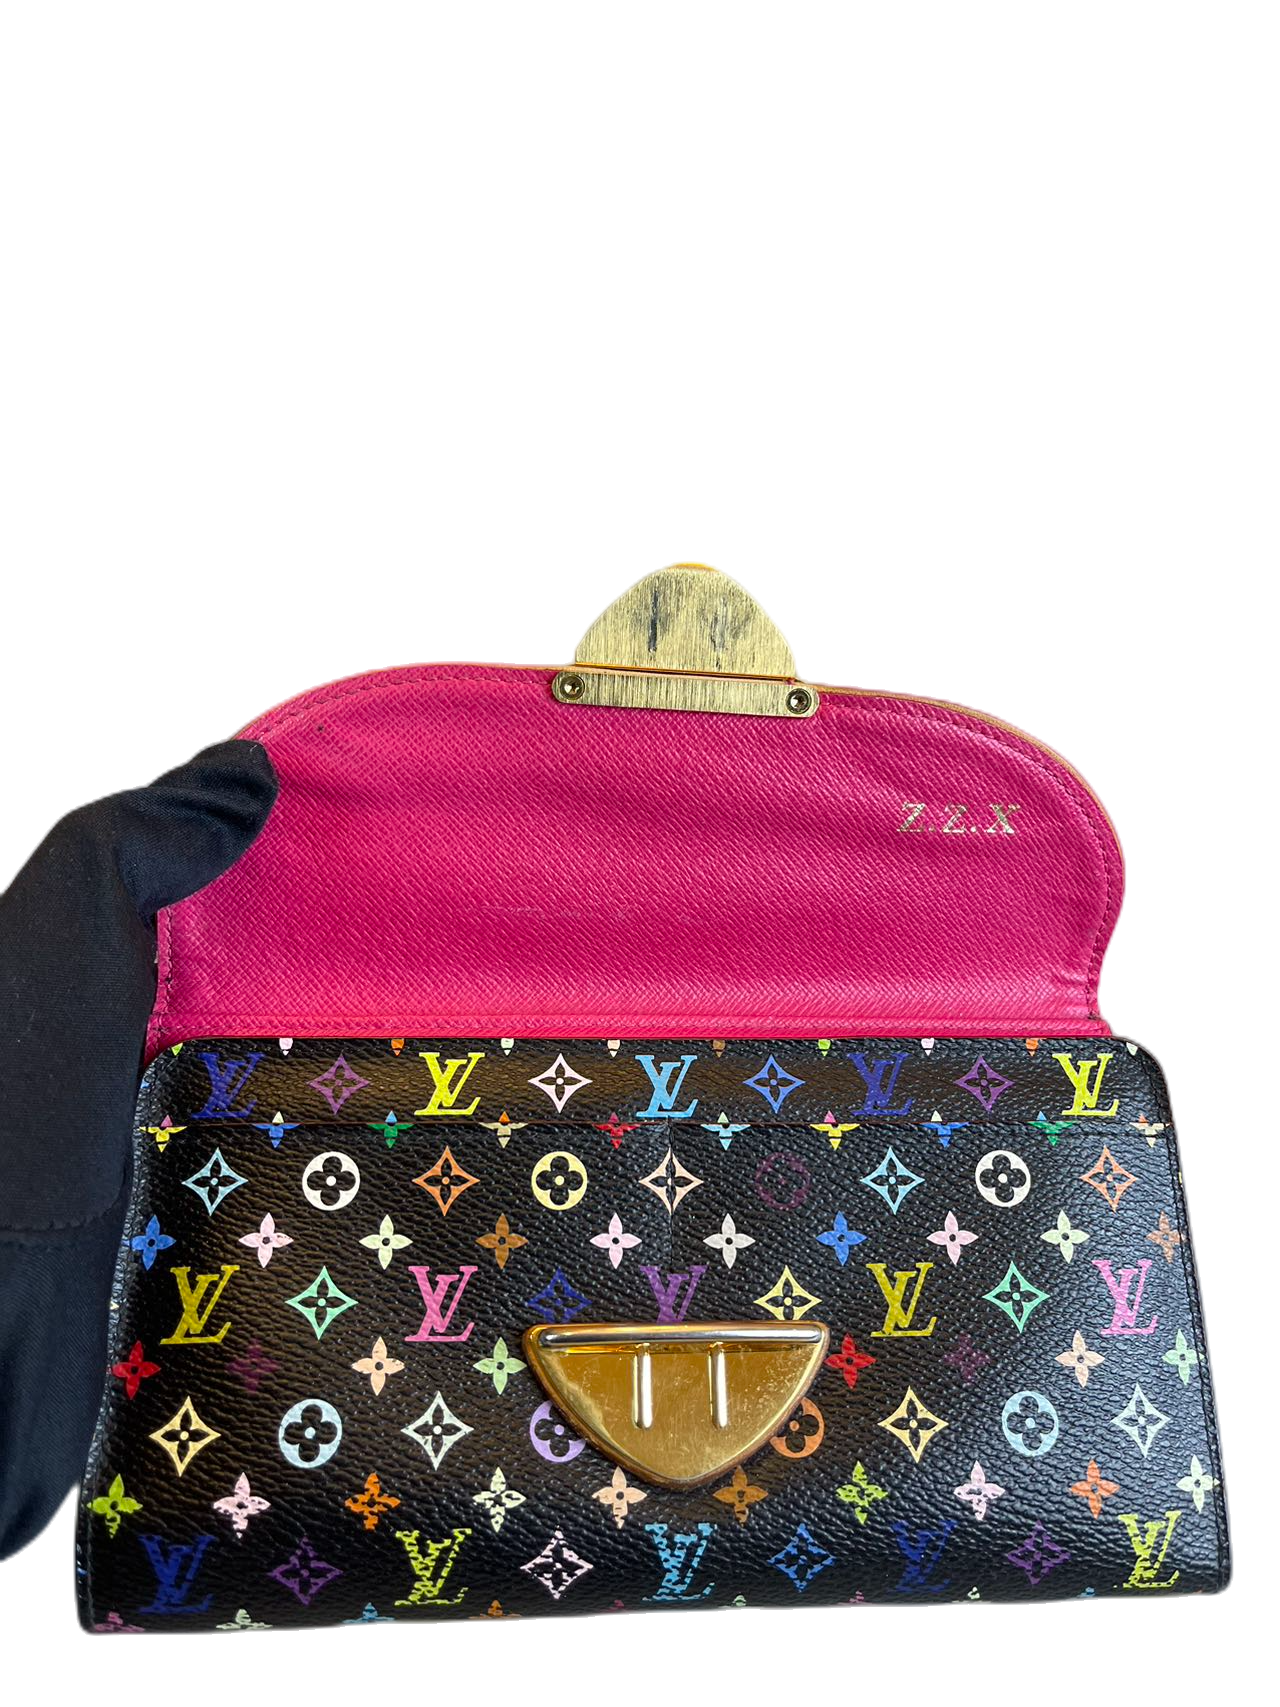 Preloved Louis Vuitton Multicolored Wallet Purse